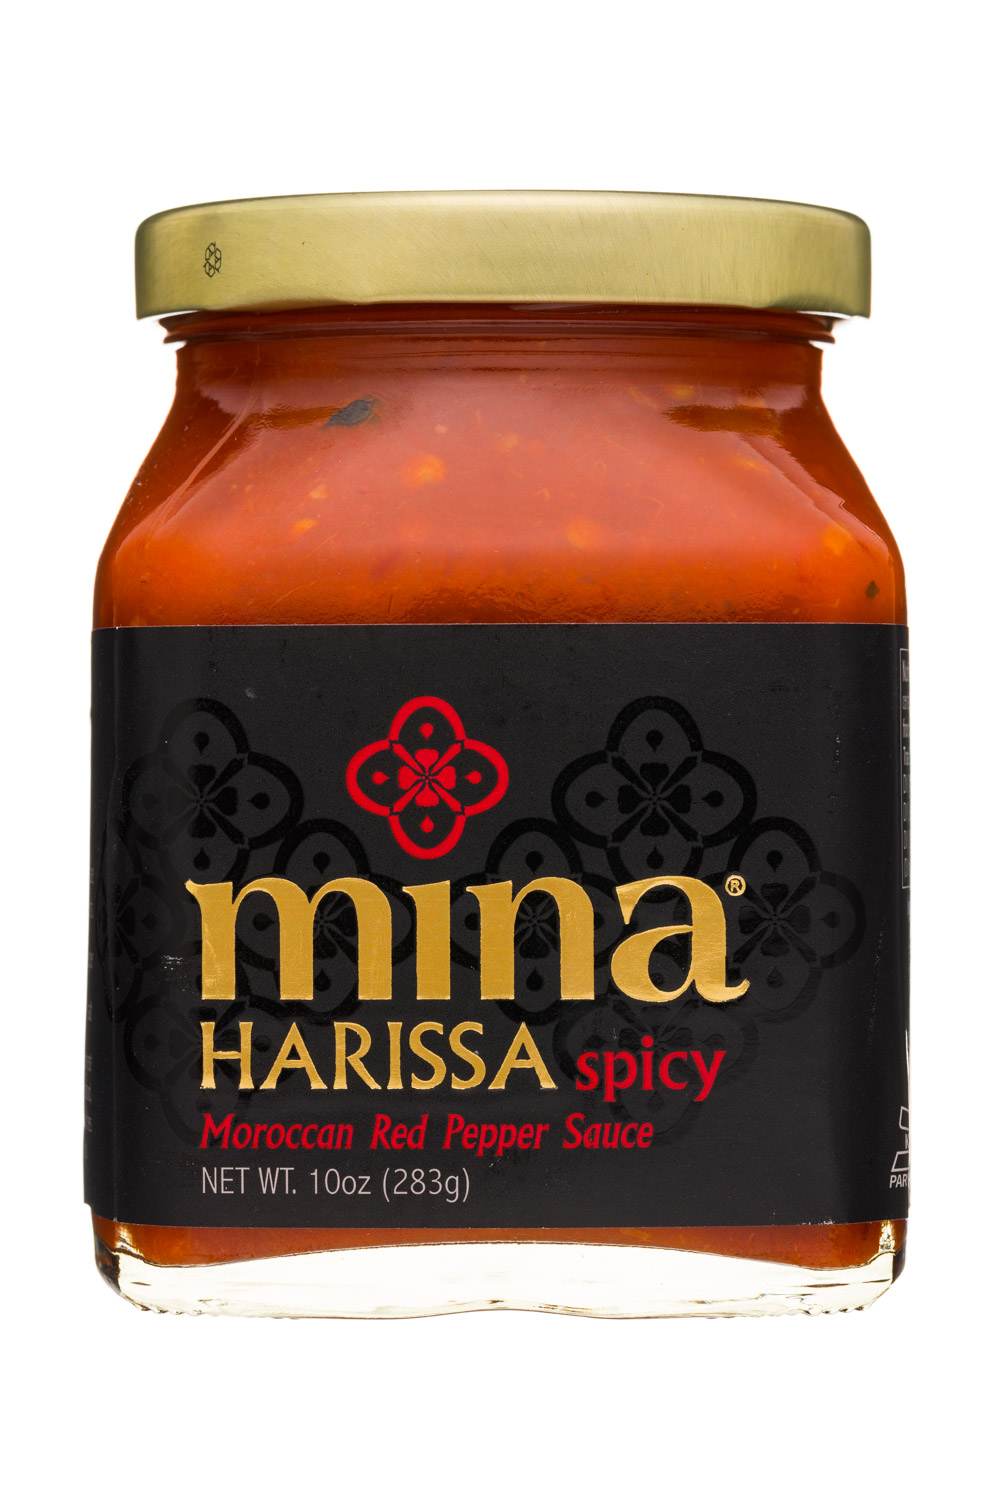 Harissa, Moroccan Red Pepper Sauce